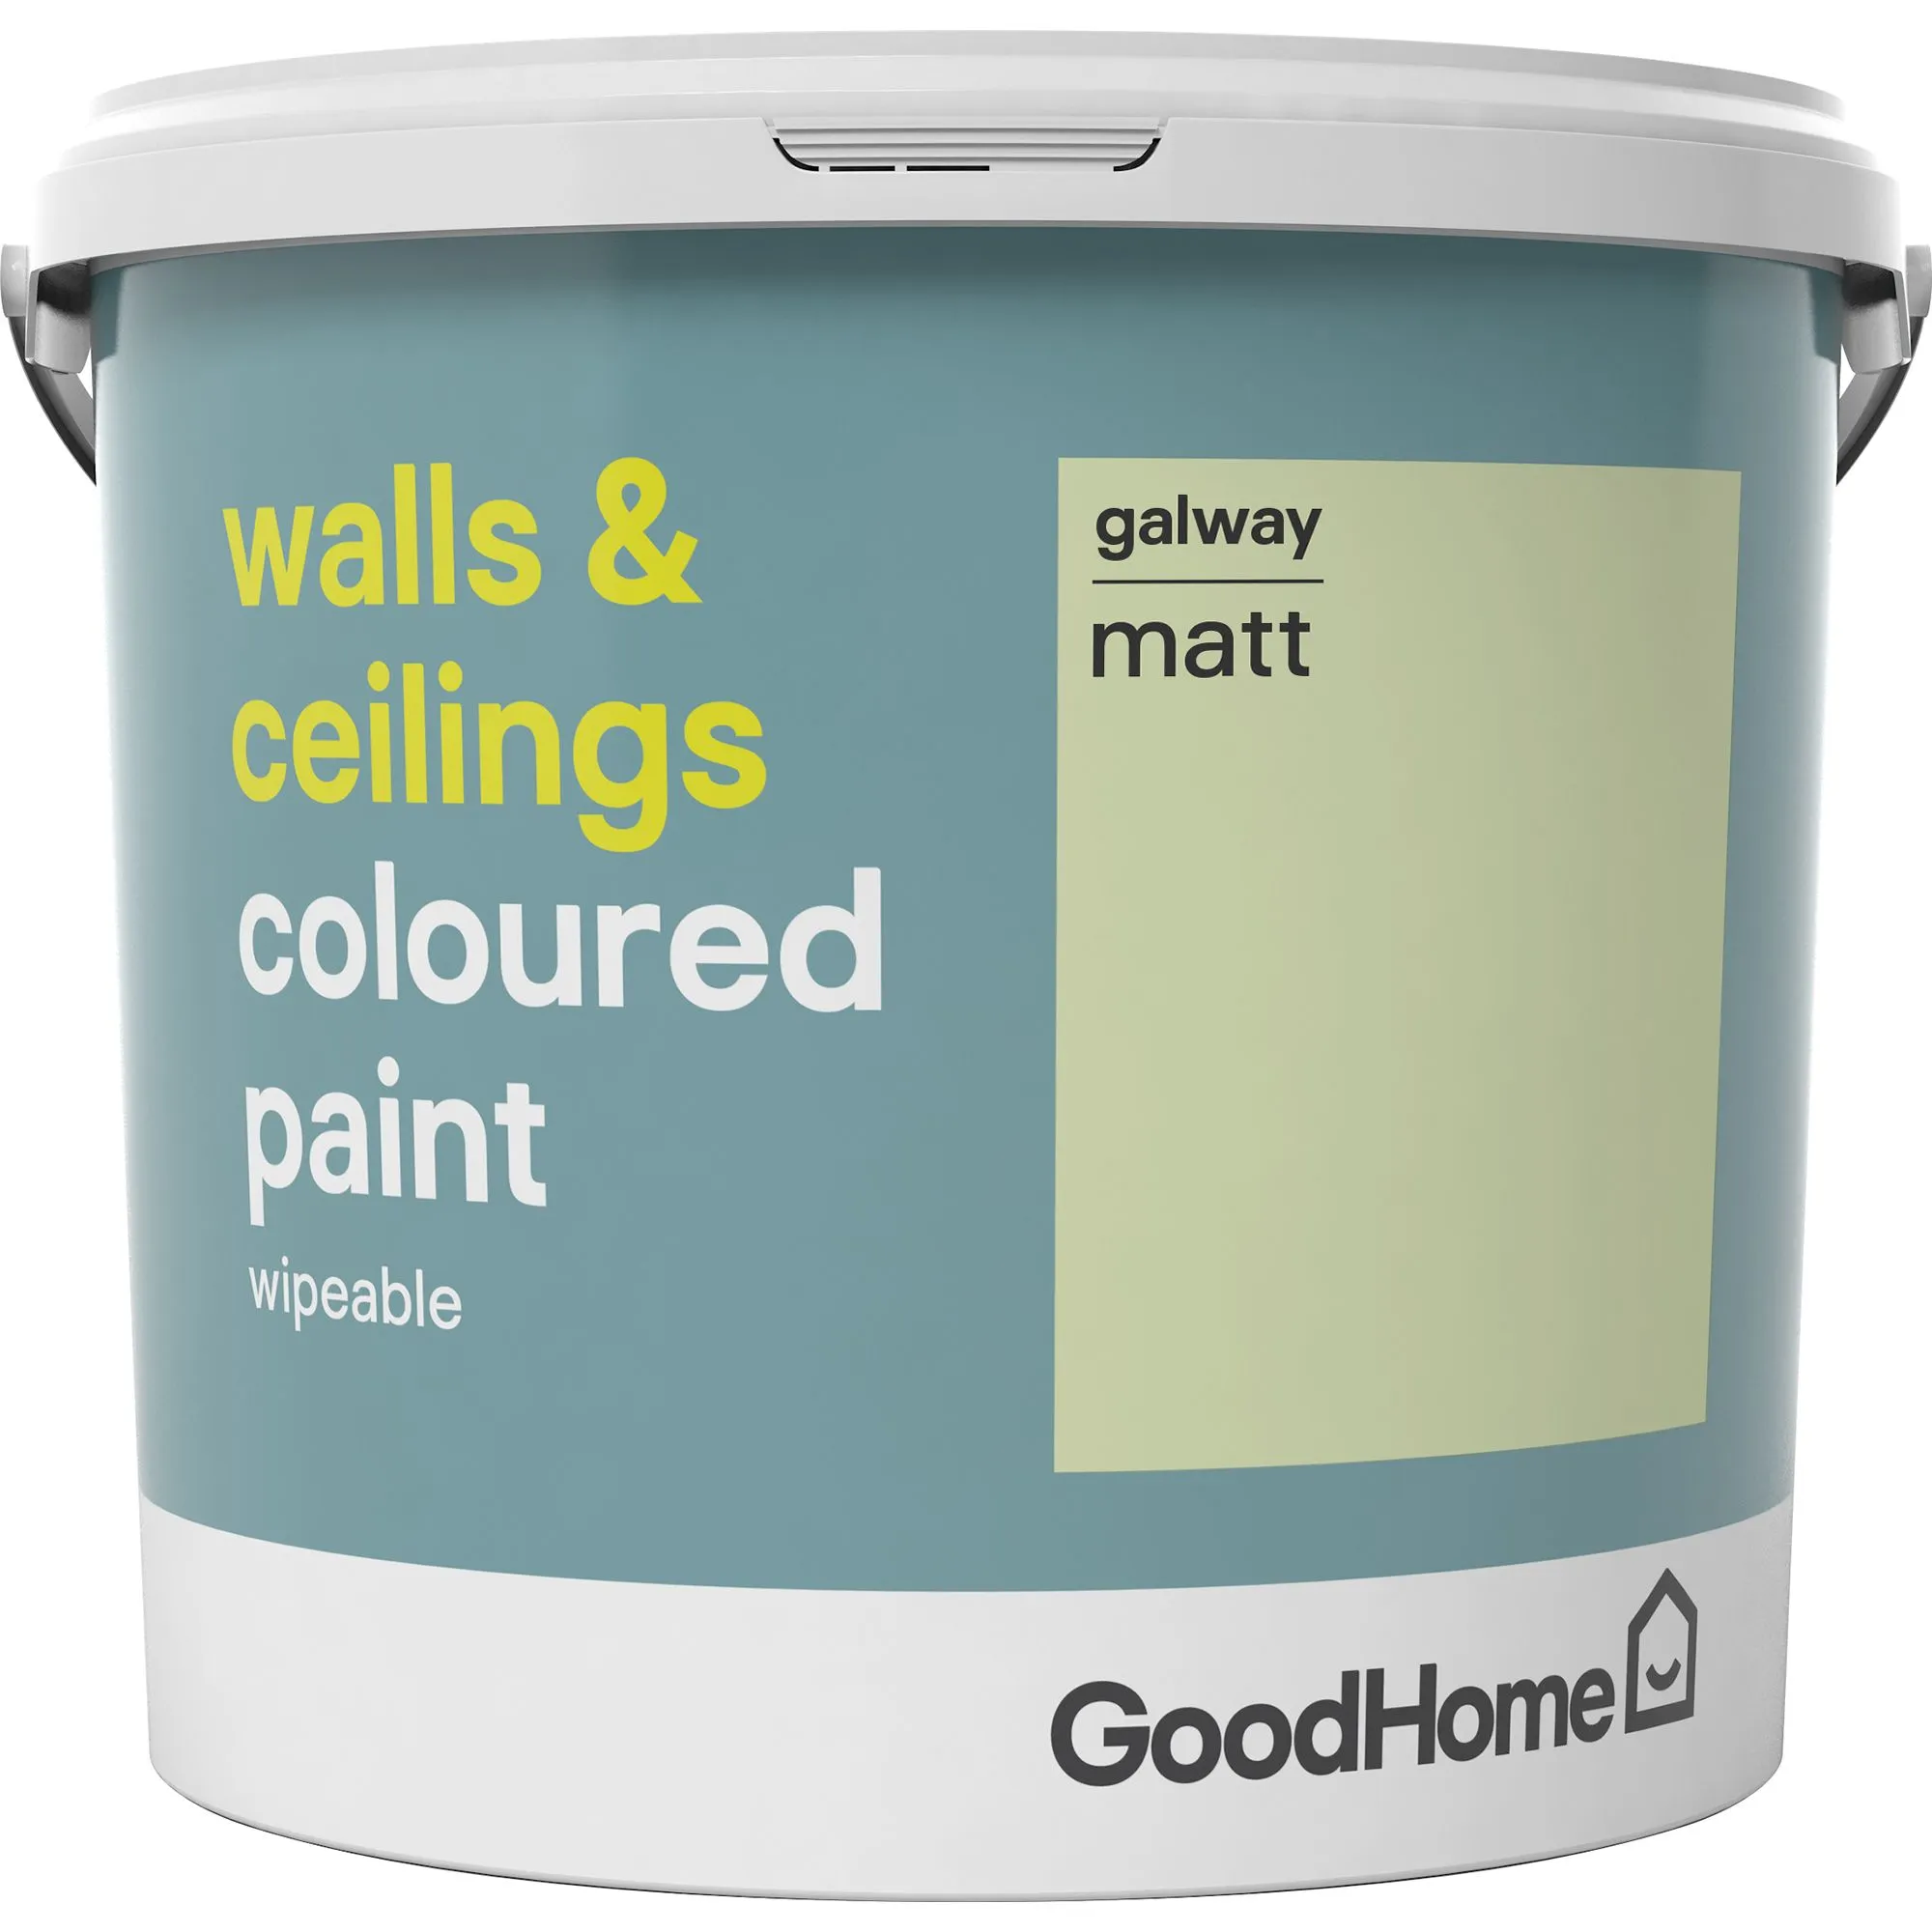 GoodHome Walls & ceilings Galway Matt Emulsion paint, 5L